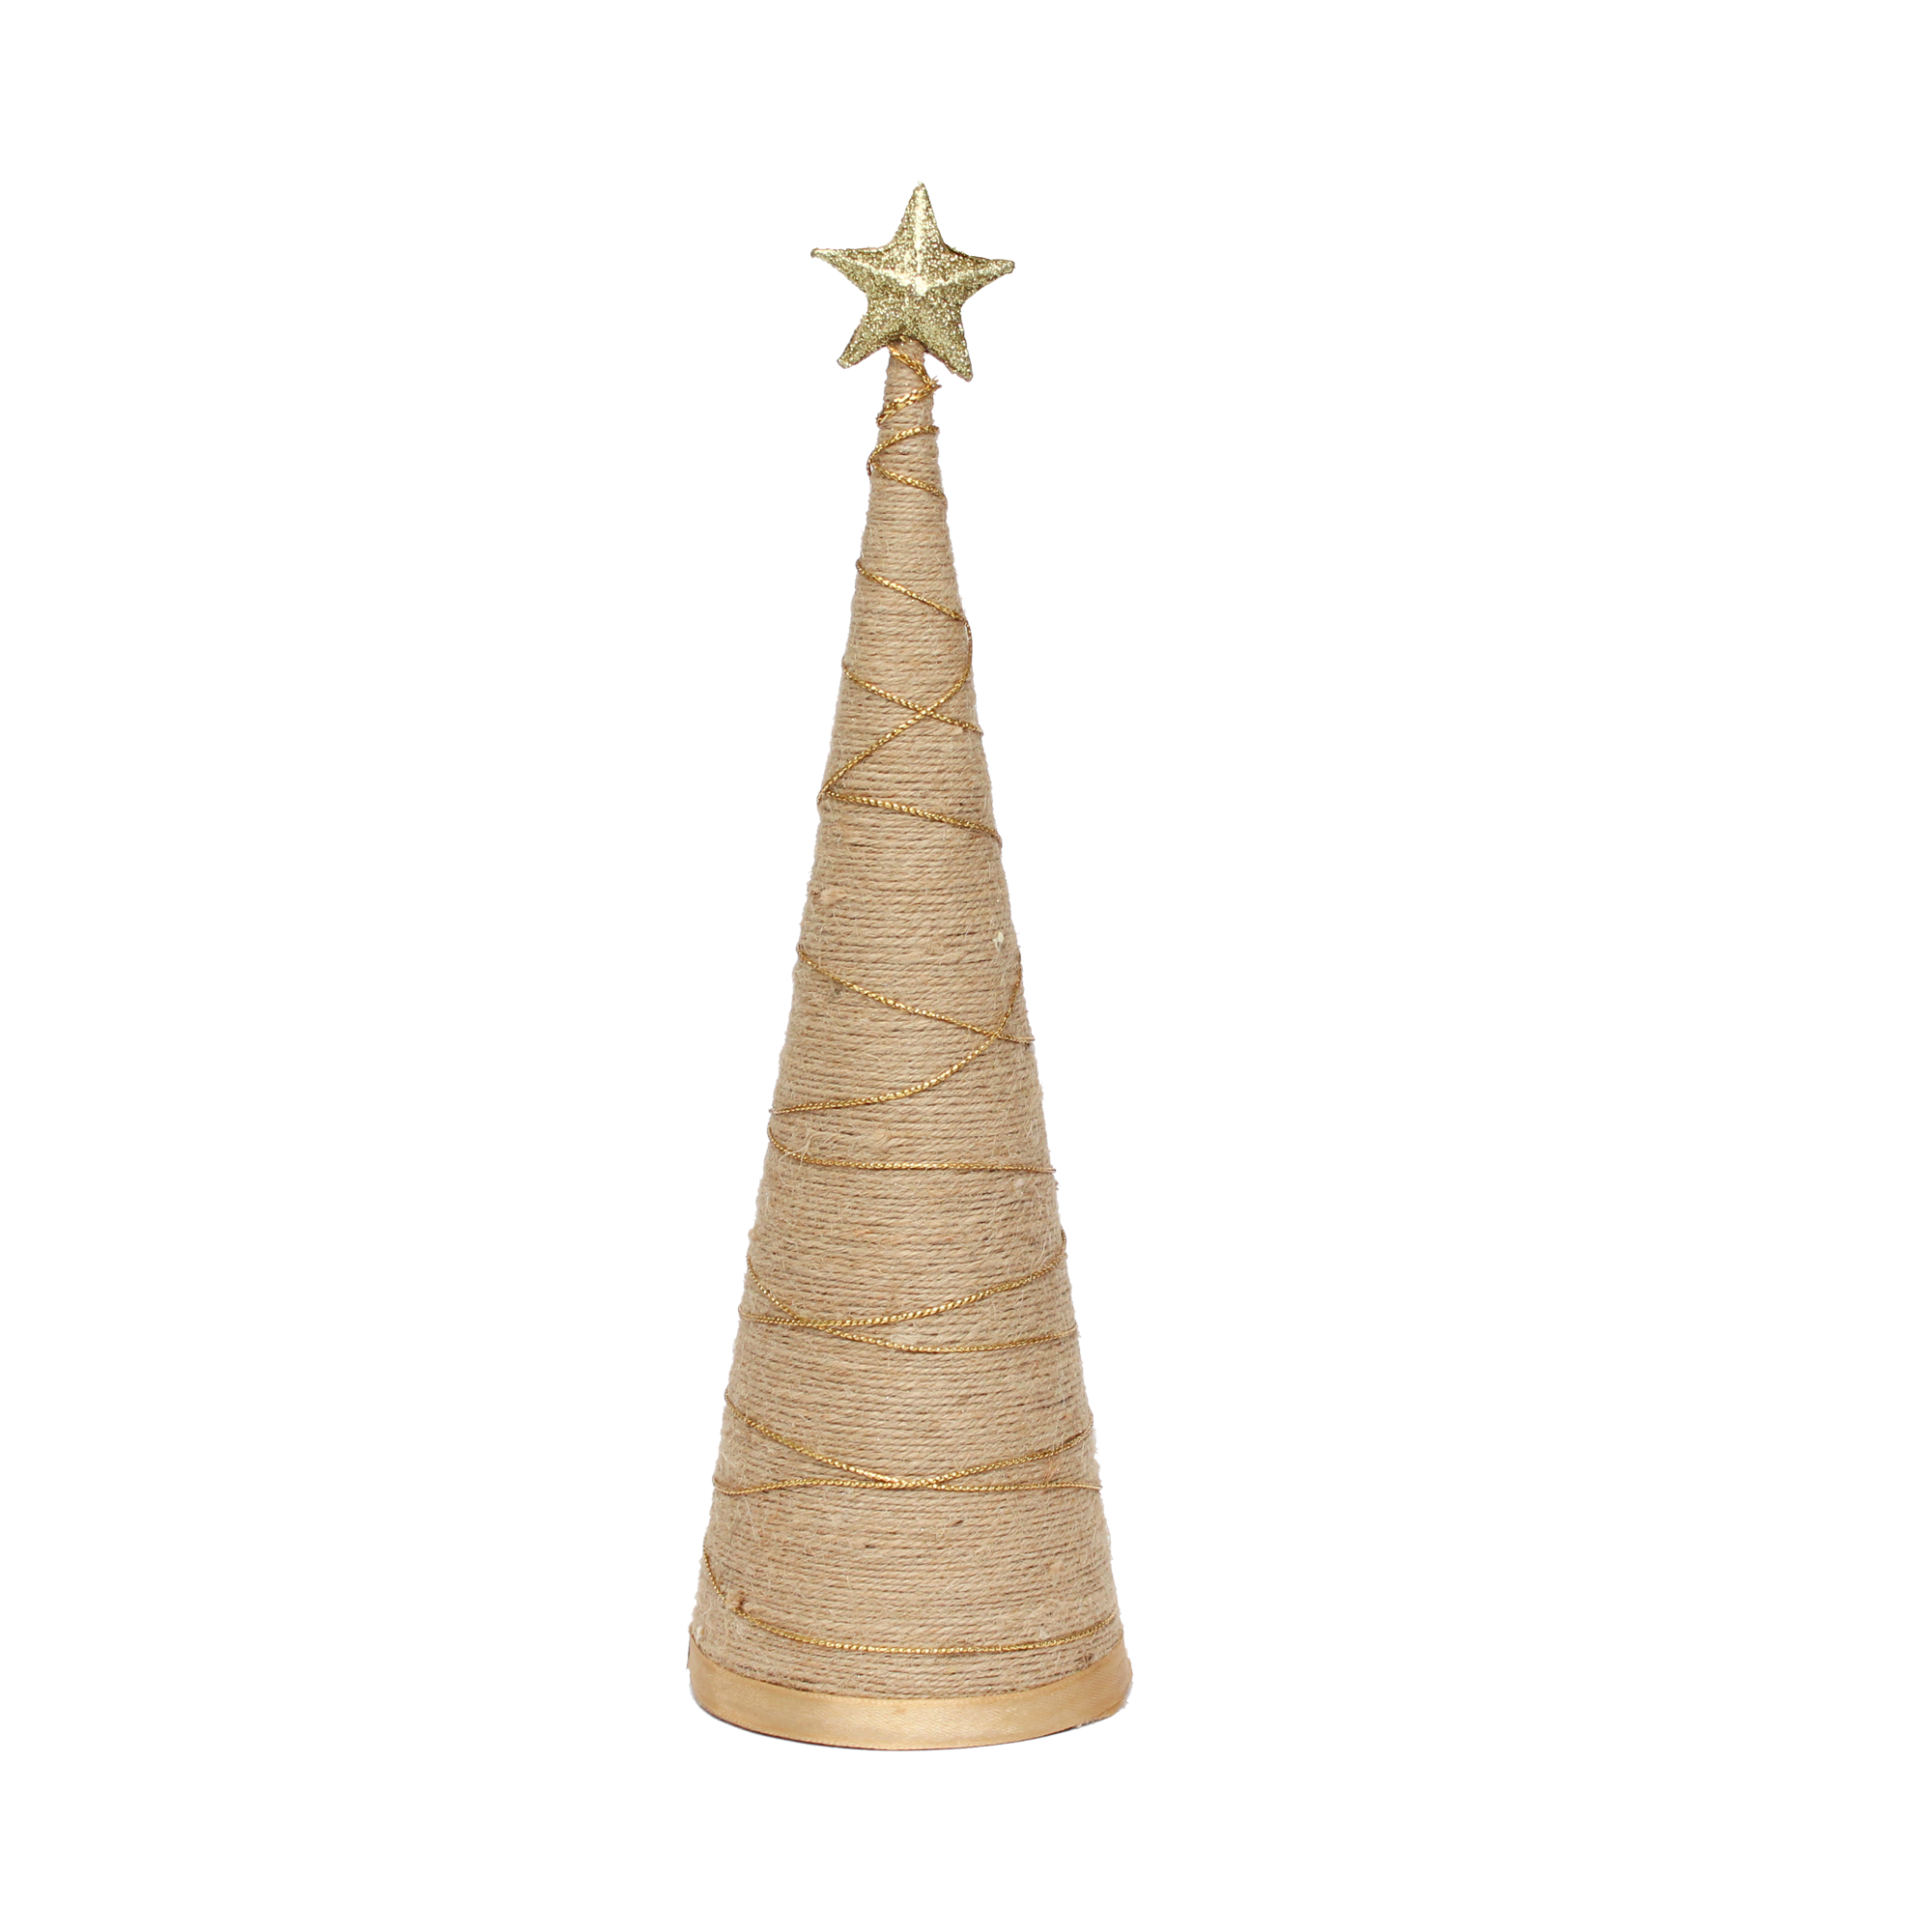 Handmade Conical Christmas Jute Tree - Height 14.5 X Width4inch, 1pc